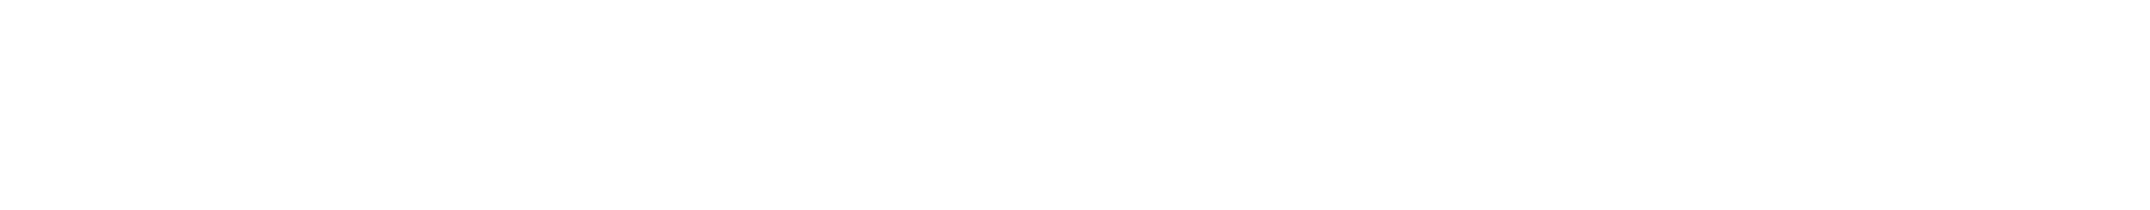  SmartRecruiters logo 